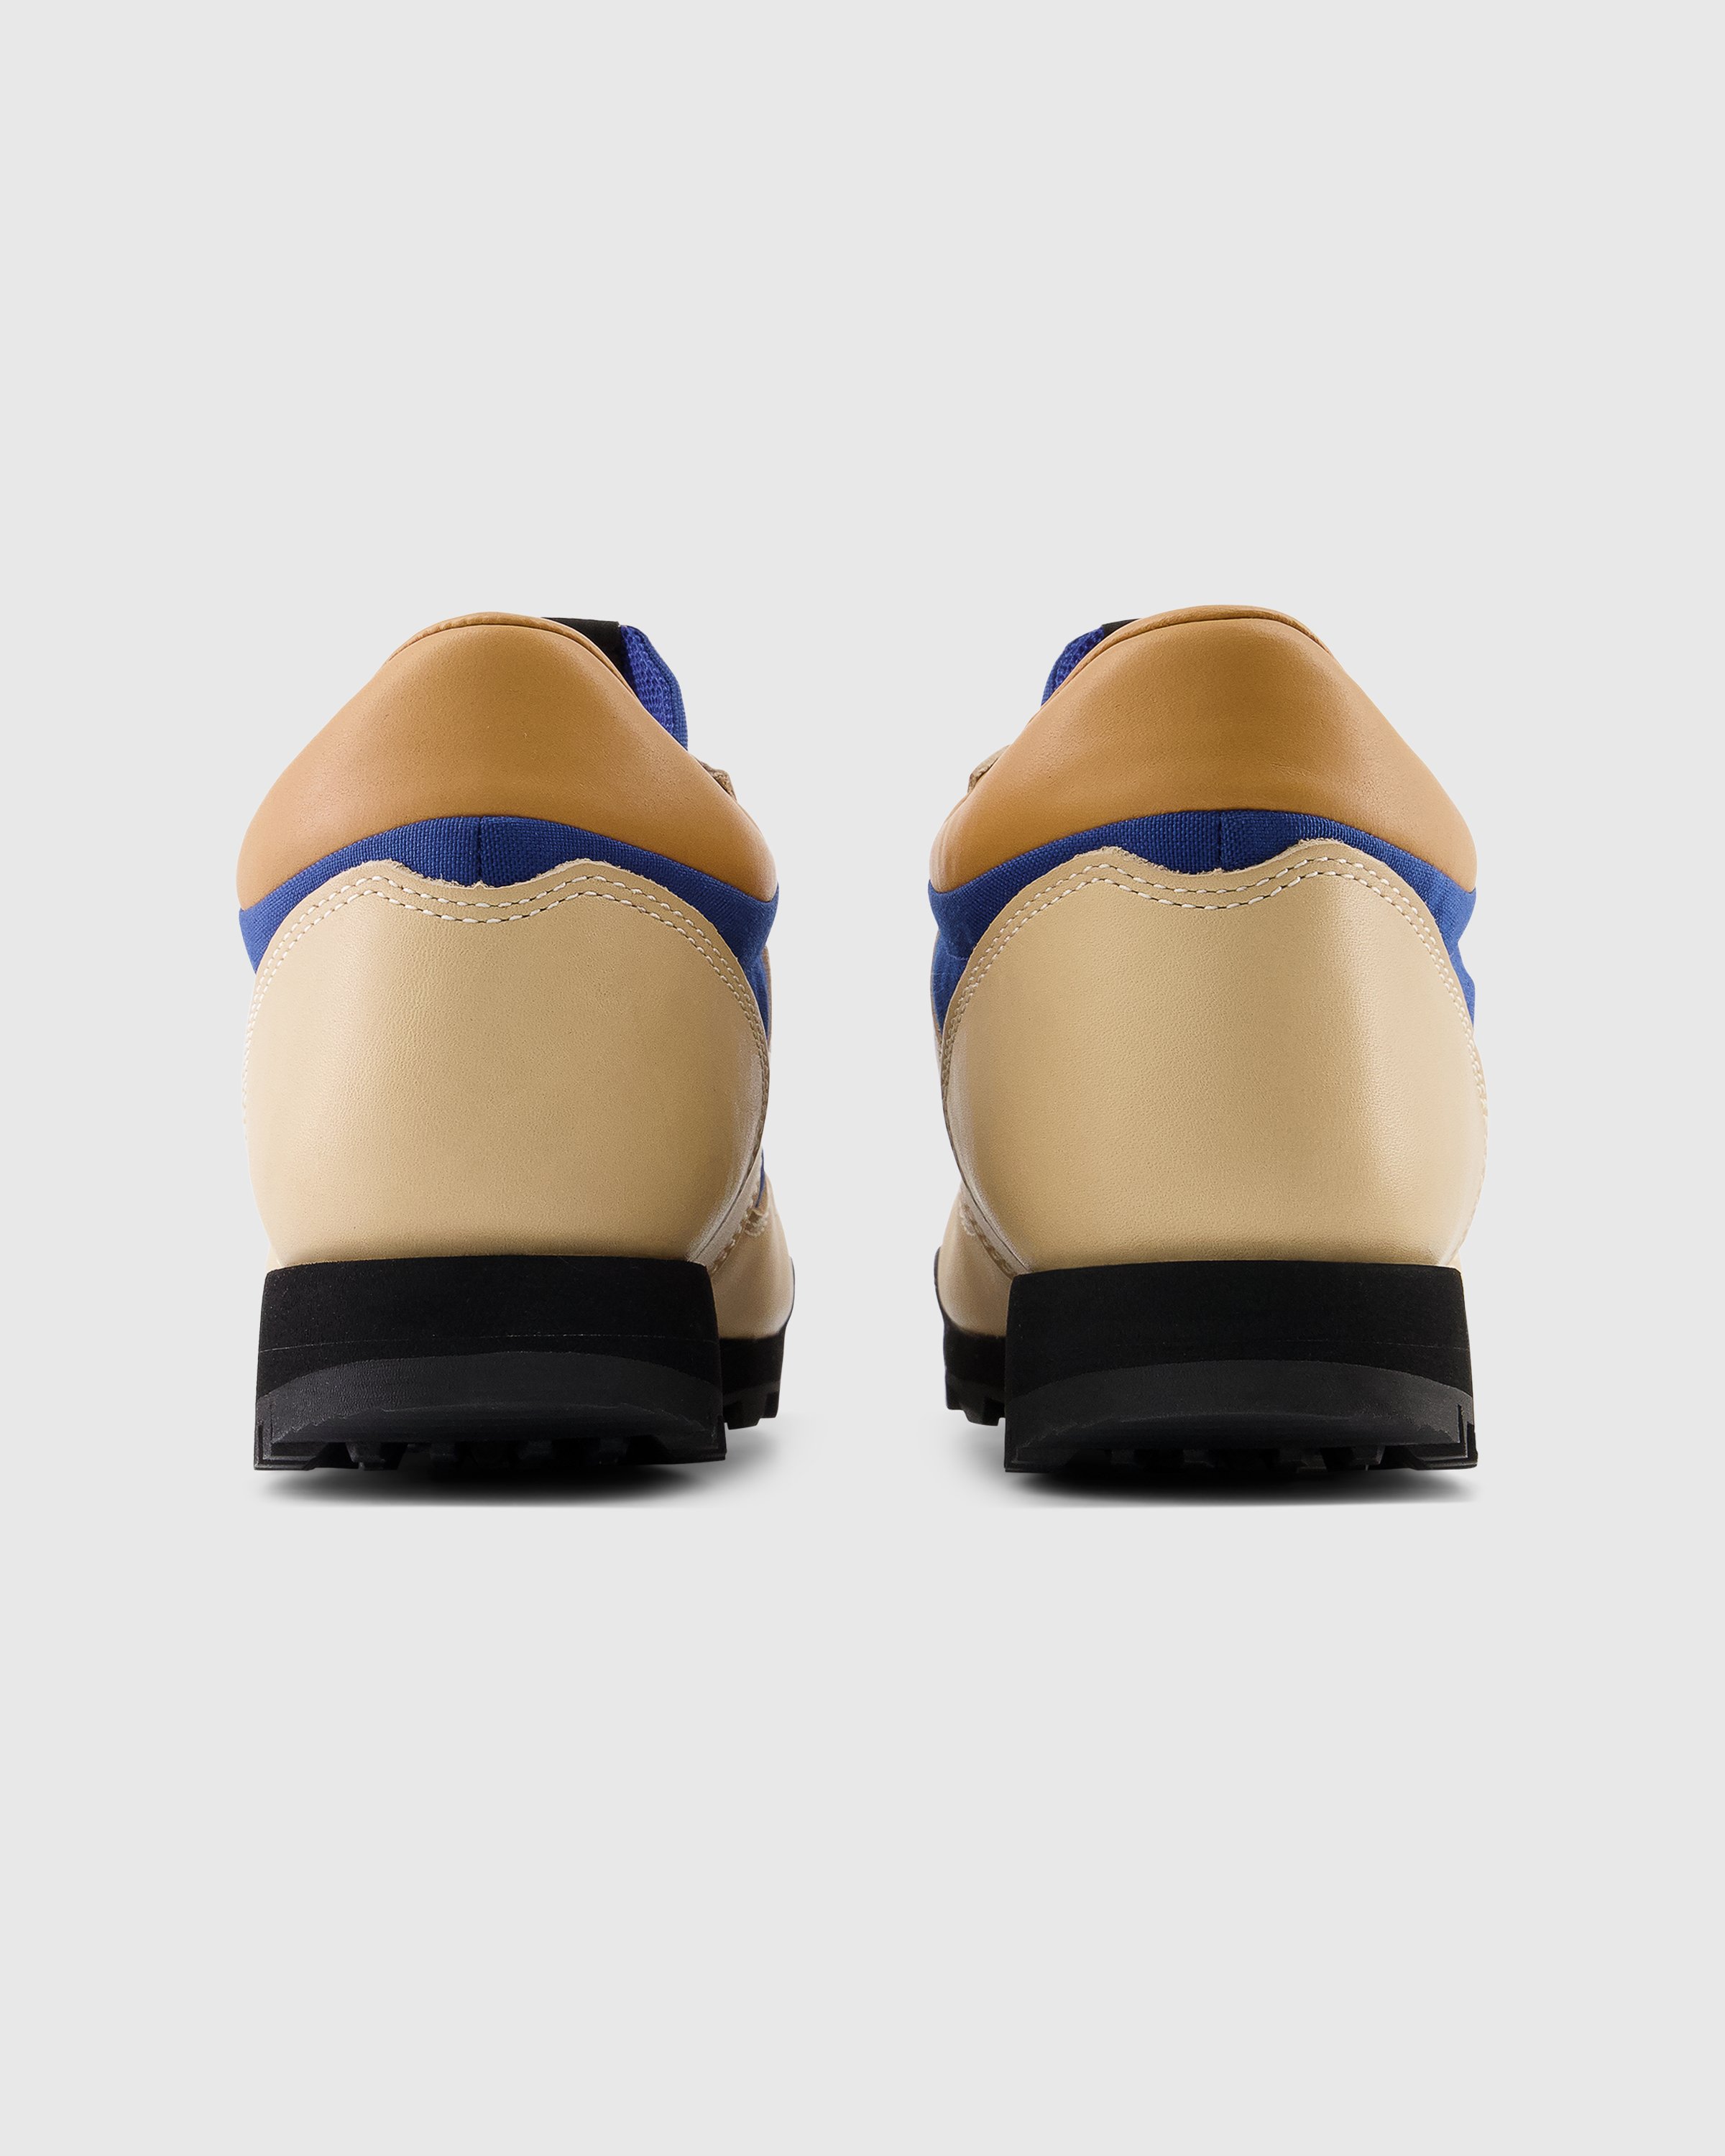 New Balance - UALGSVT Rainier Dune - Footwear - Beige - Image 5